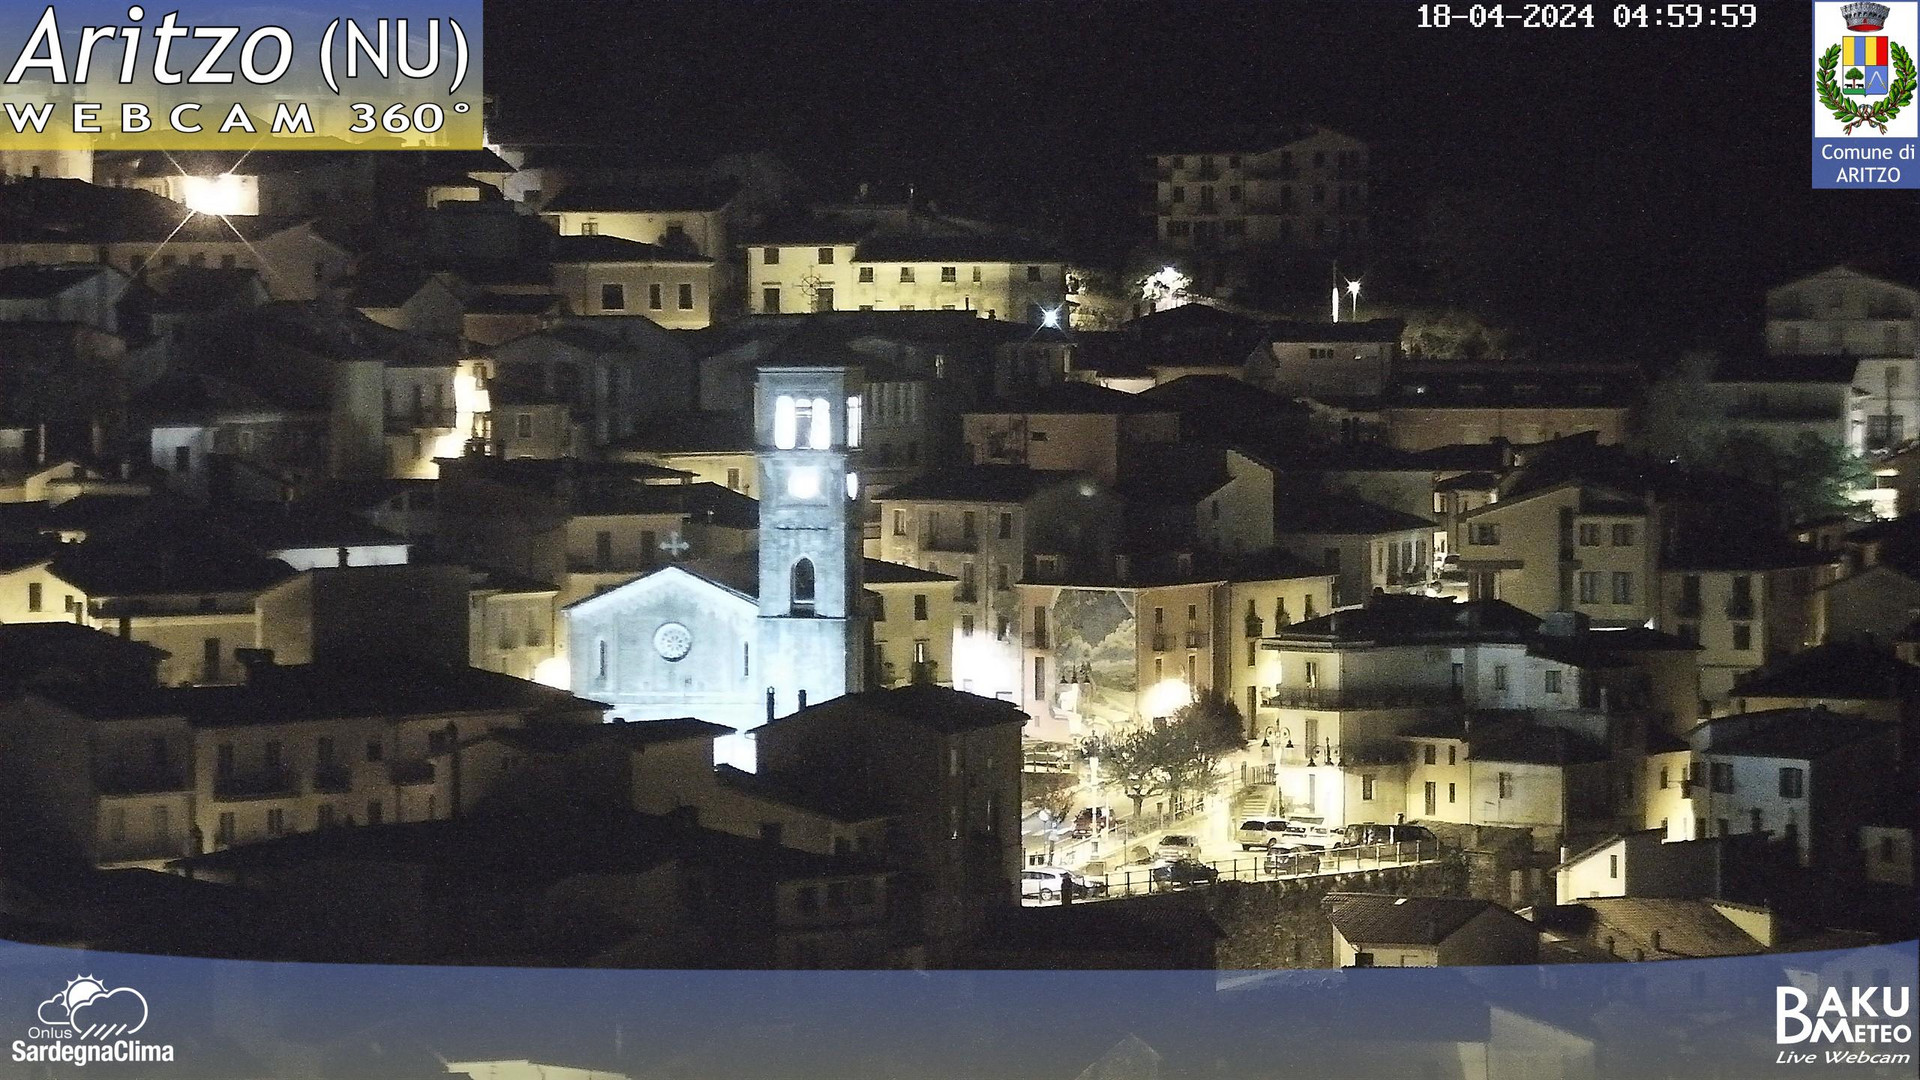 time-lapse frame, AritzoD webcam